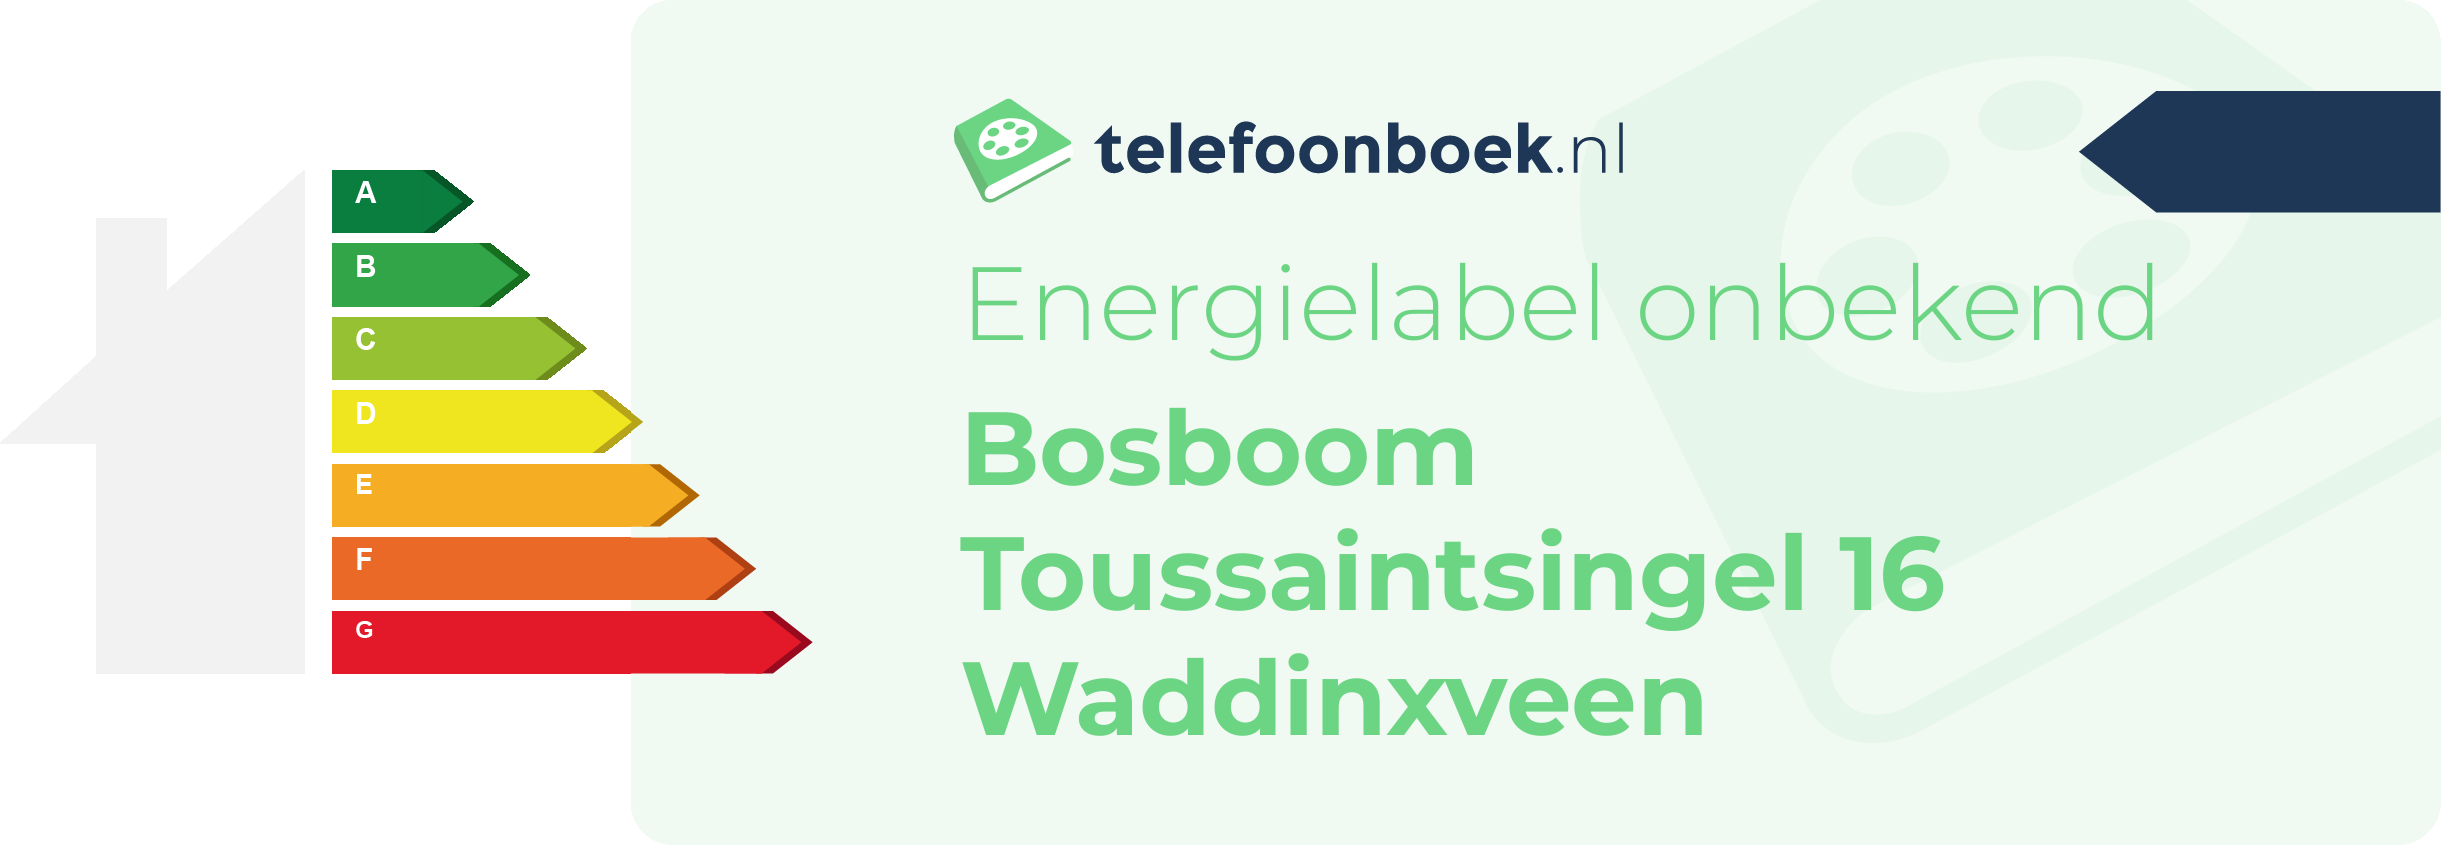 Energielabel Bosboom Toussaintsingel 16 Waddinxveen